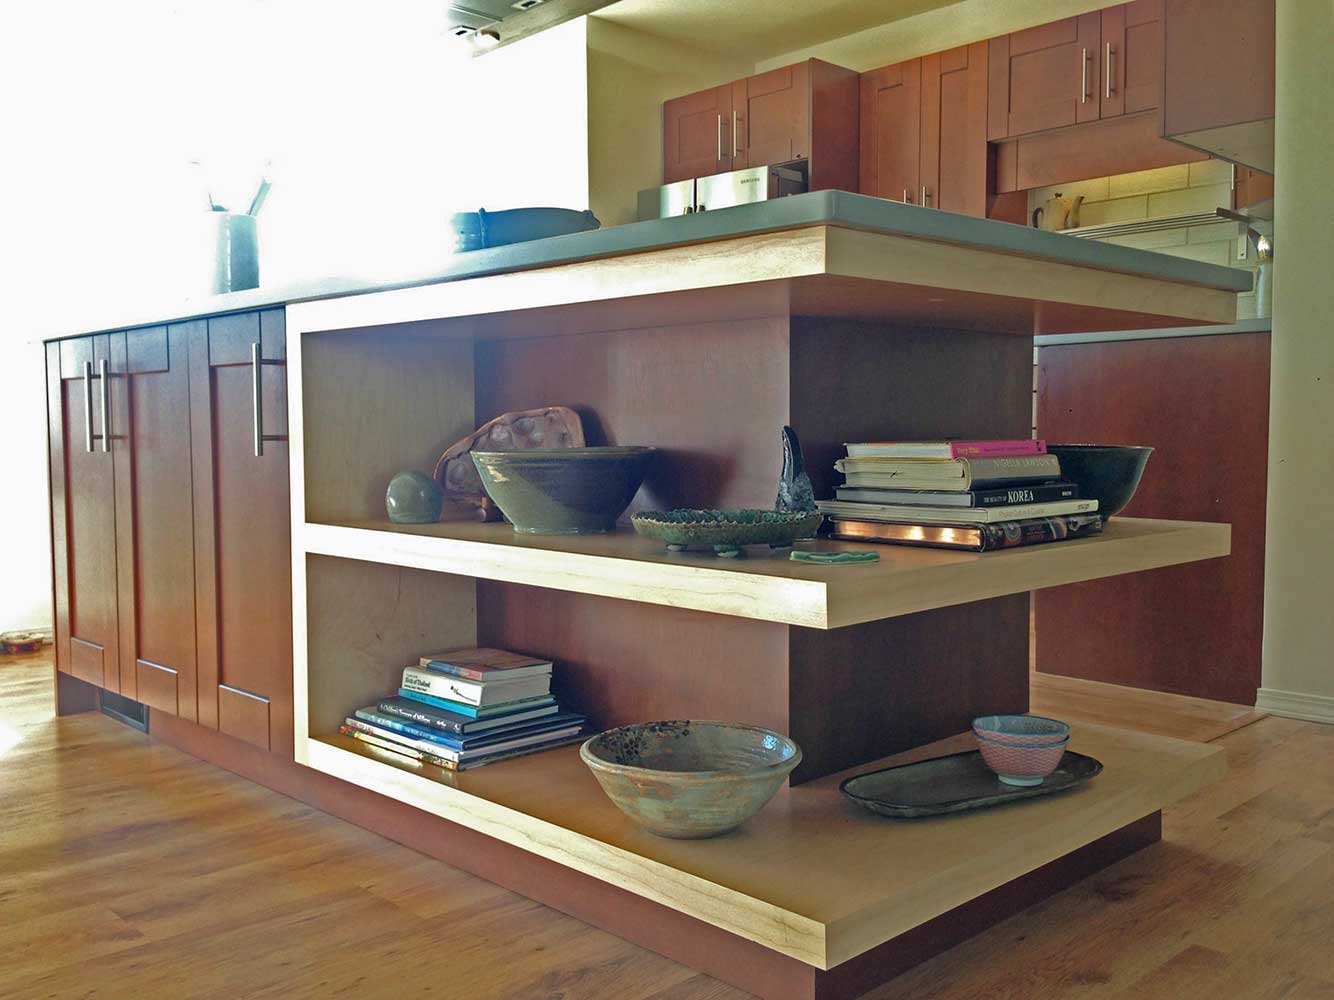 Home Kitchen Cabinet Refacing In Victoria Nanaimo Bc